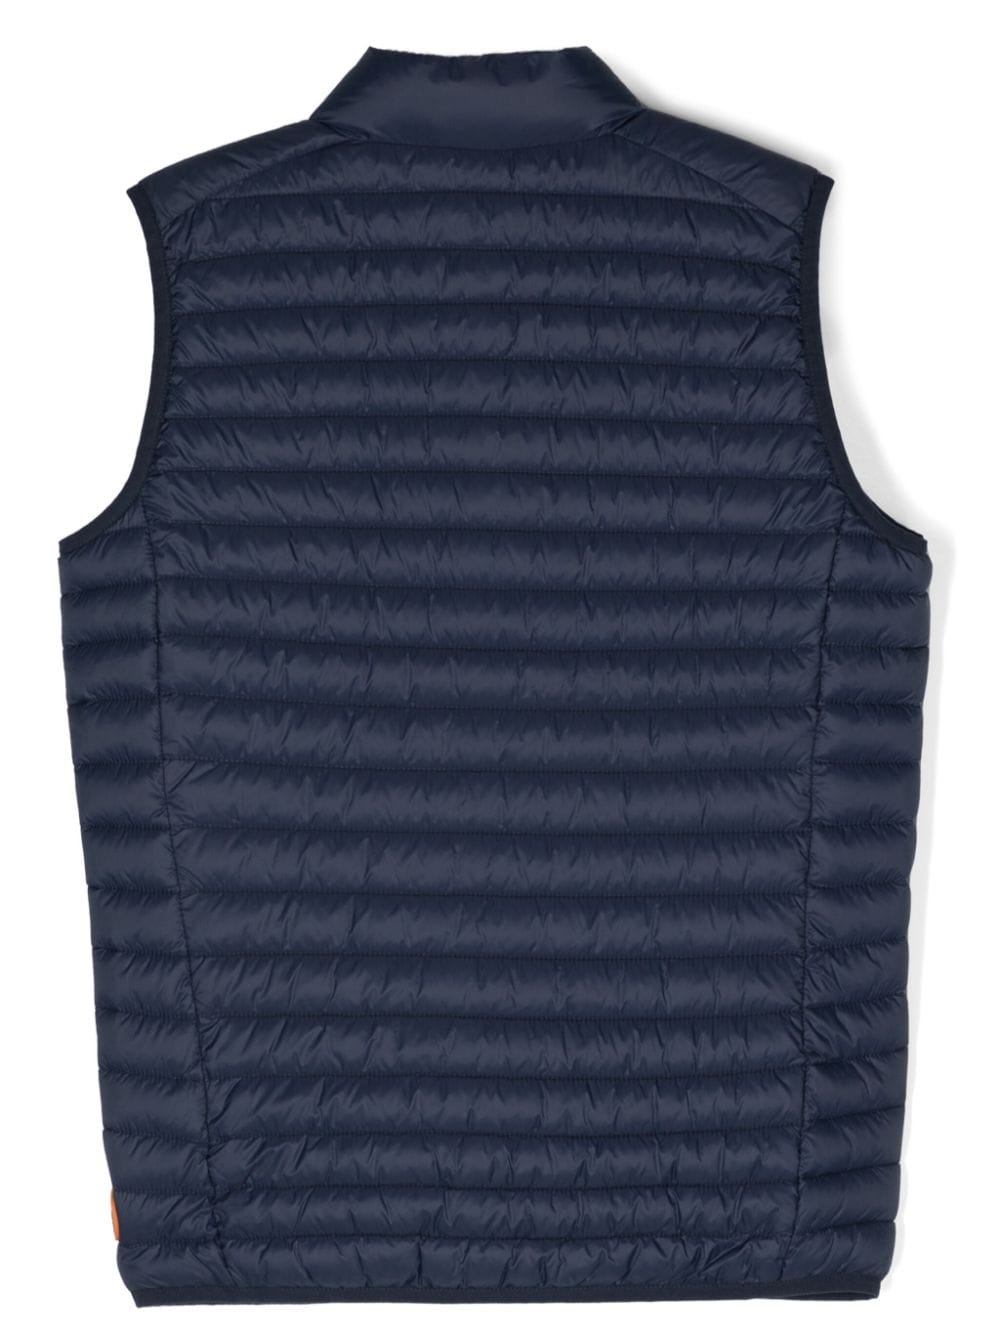 Blue vest for boys with logo